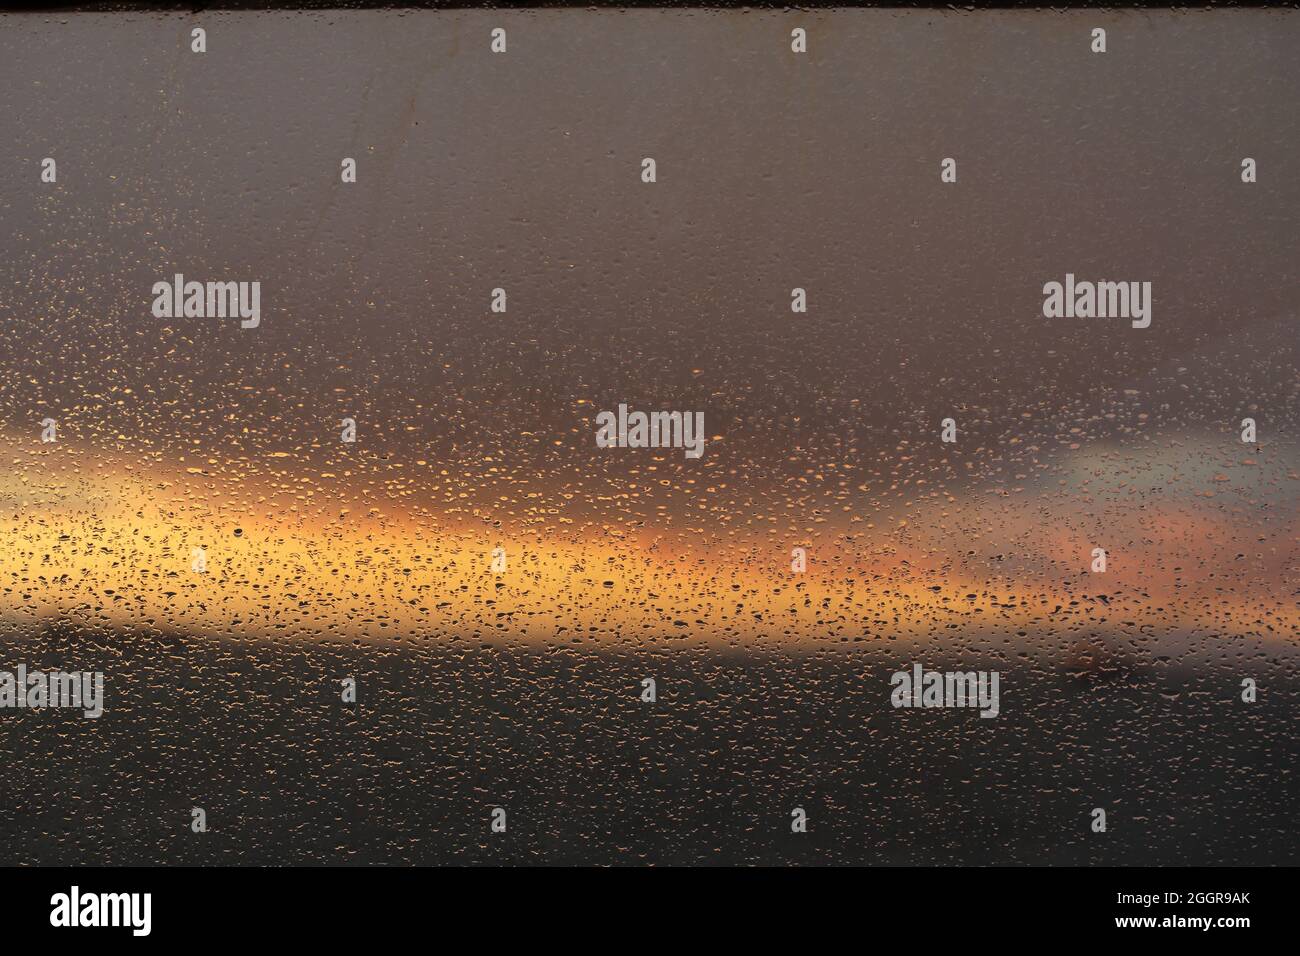 sunrise lights reflecting on rain drops on window at wheel house of ship Stock Photo